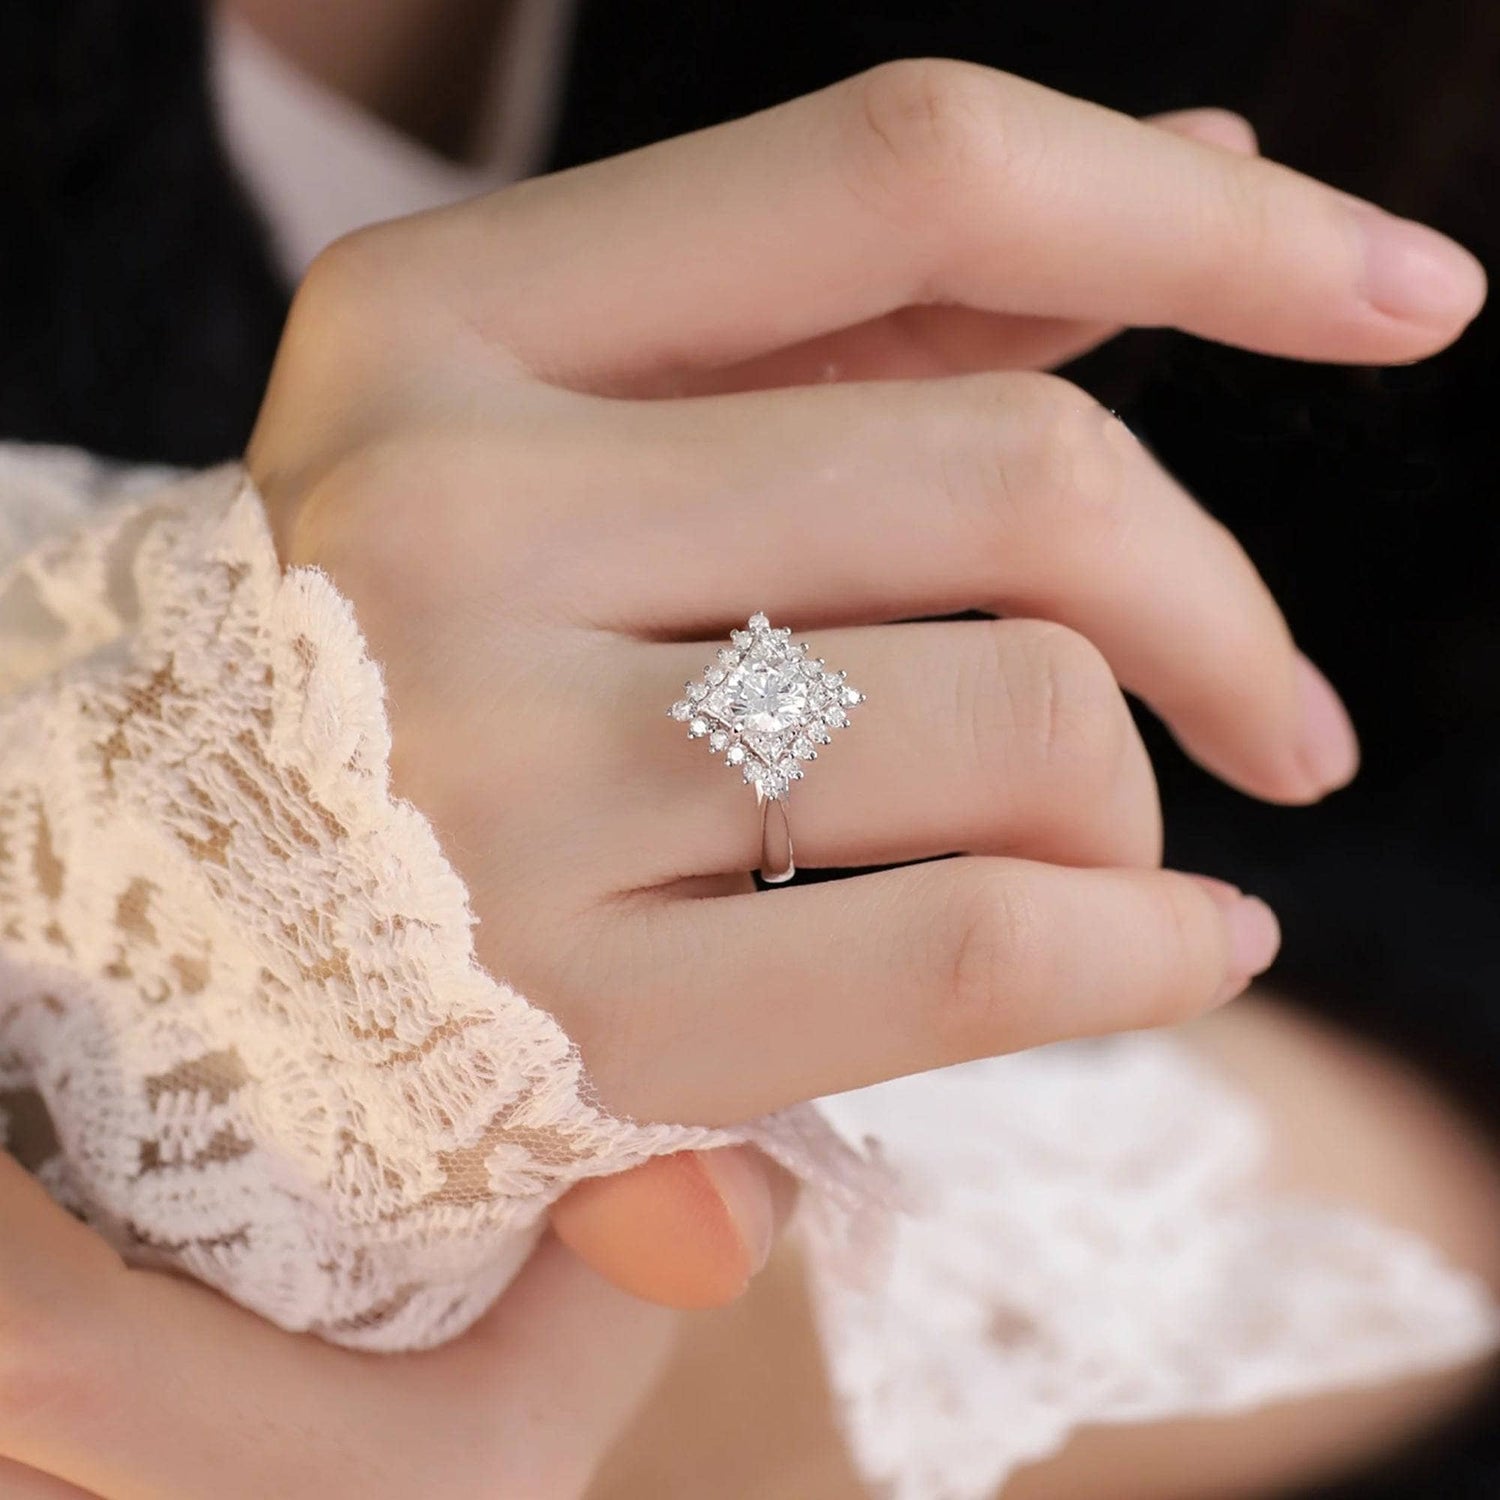 Round Cut Moissanite Diamond Shaped Engagement Ring - Black Diamonds New York